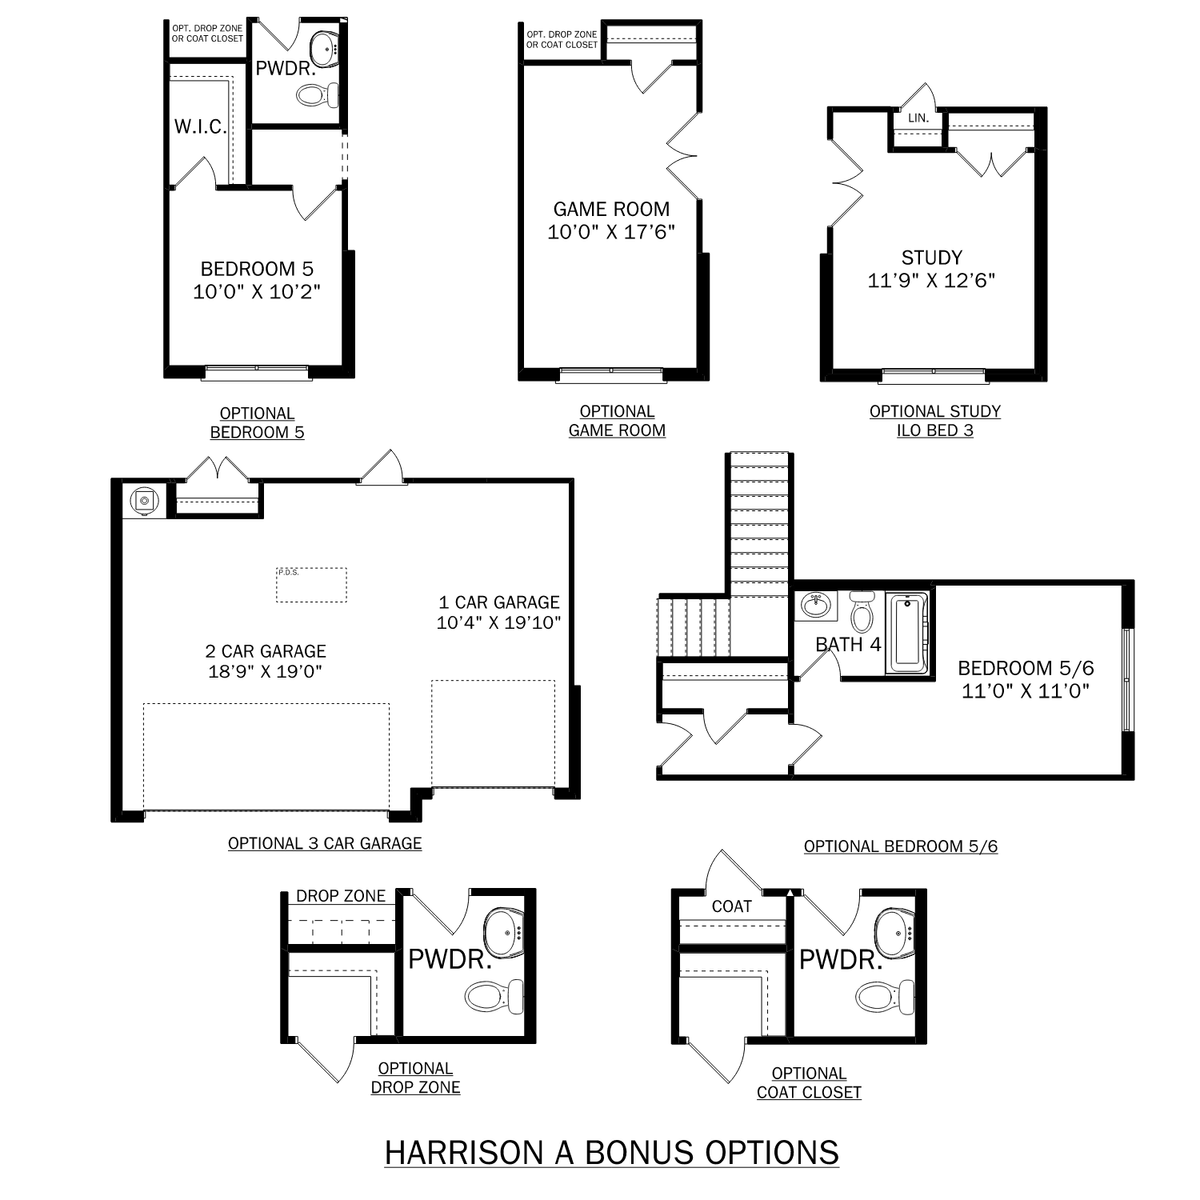 3 - The Harrison with Bonus buildable floor plan layout in Davidson Homes' North Ridge community.